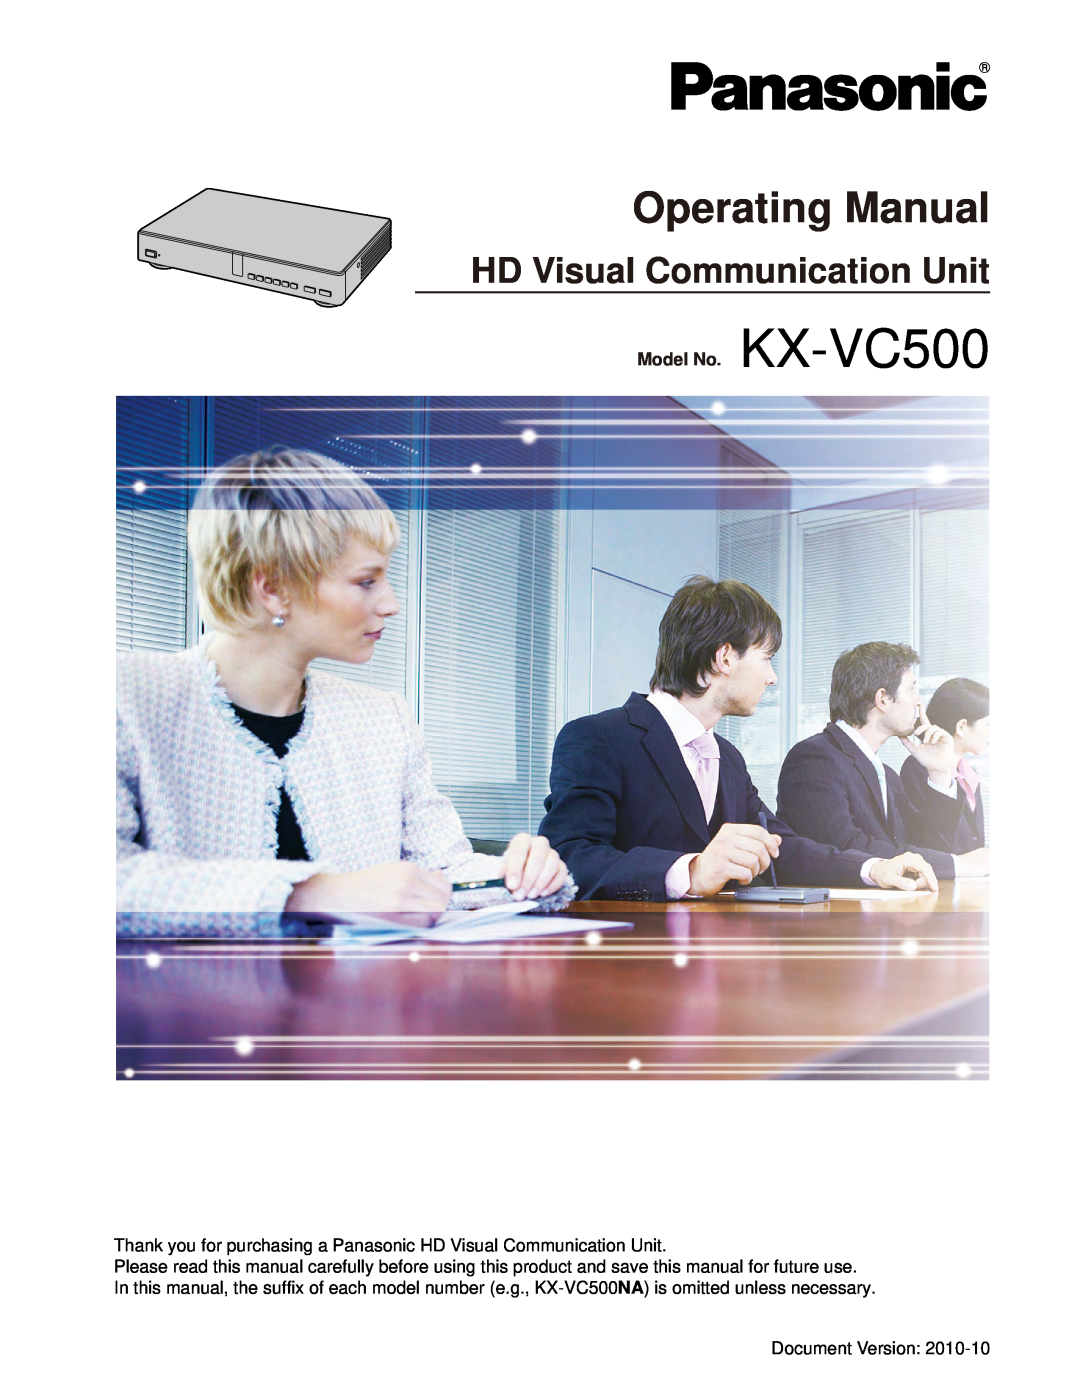 Panasonic manual Operating Manual, HD Visual Communication Unit, Model No. KX-VC500 